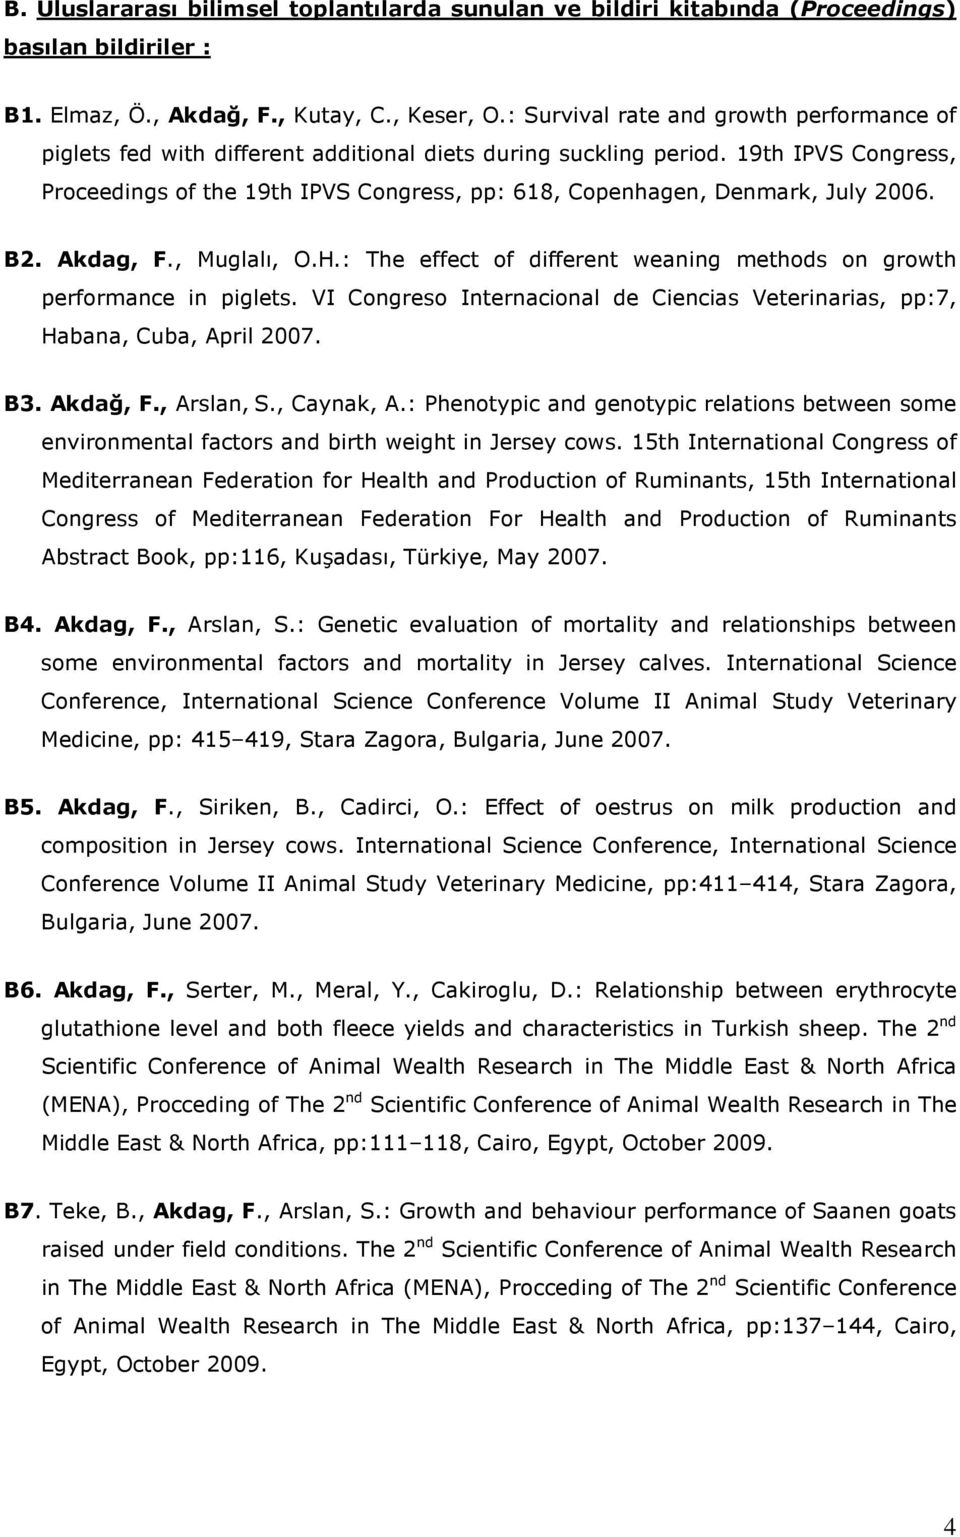 19th IPVS Congress, Proceedings of the 19th IPVS Congress, pp: 618, Copenhagen, Denmark, July 2006. B2. Akdag, F., Muglalı, O.H.